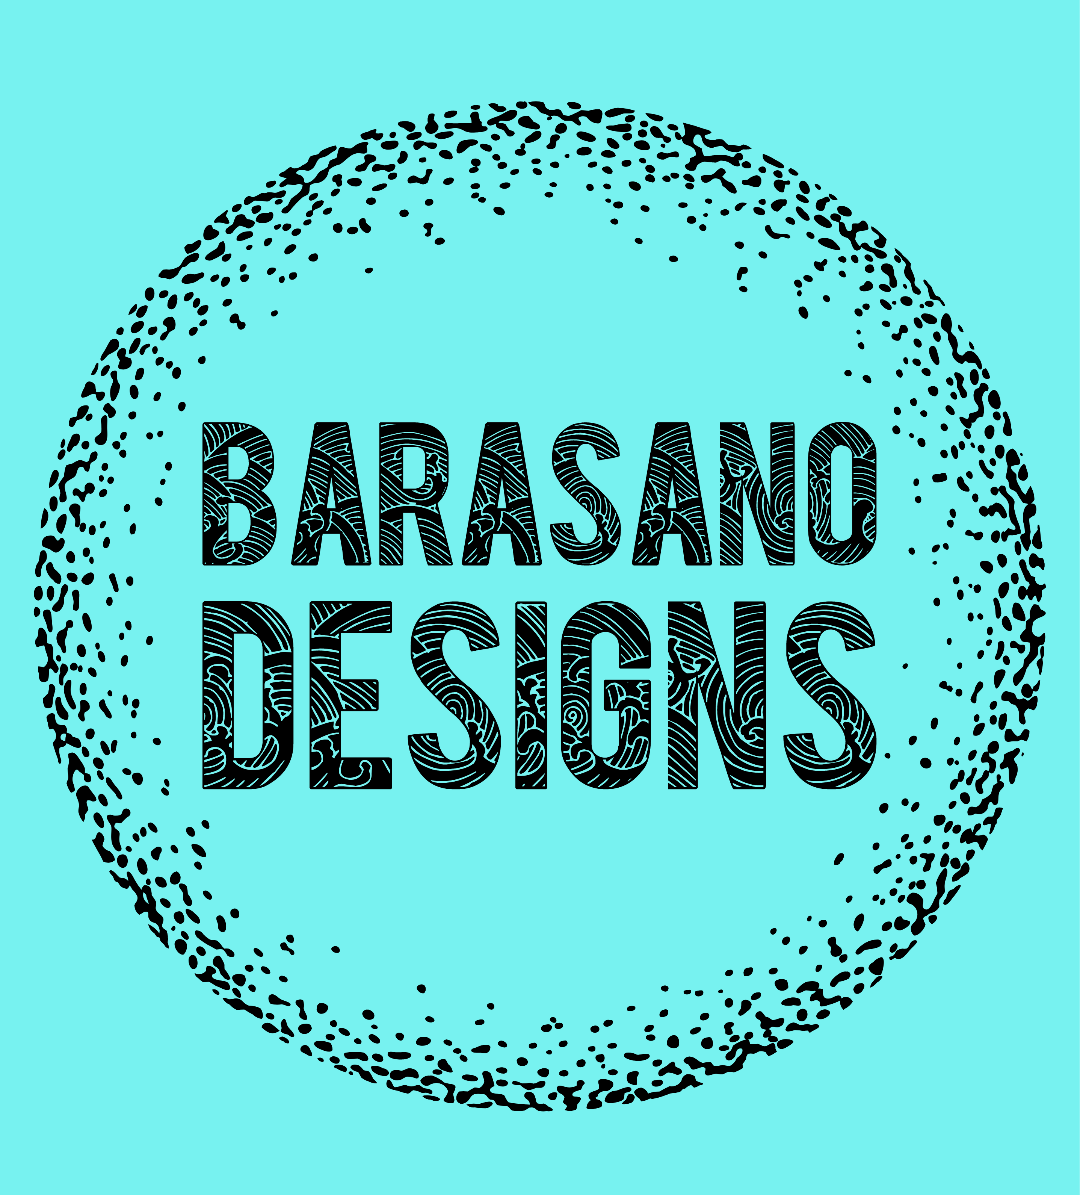 Barasano Designs; handmade up-cycled goods